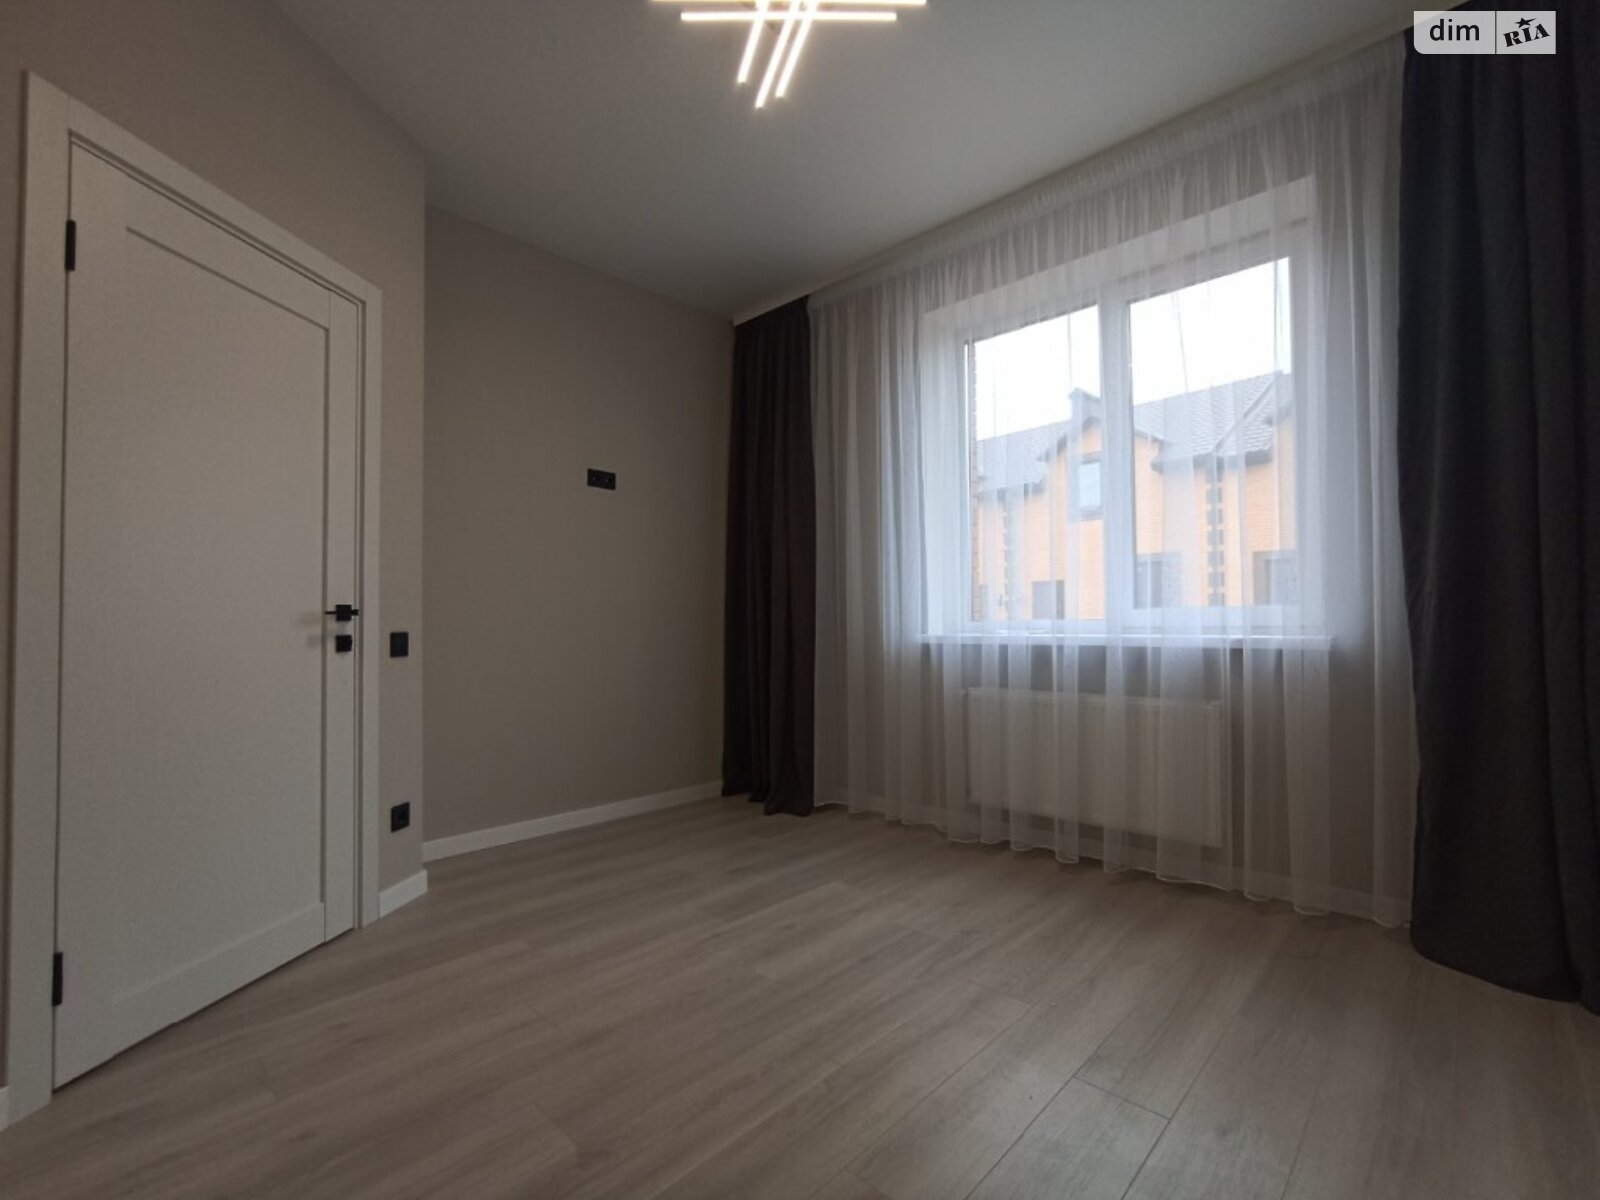 Продажа части дома в Зарванцах, улица Мечникова, 3 комнаты фото 1